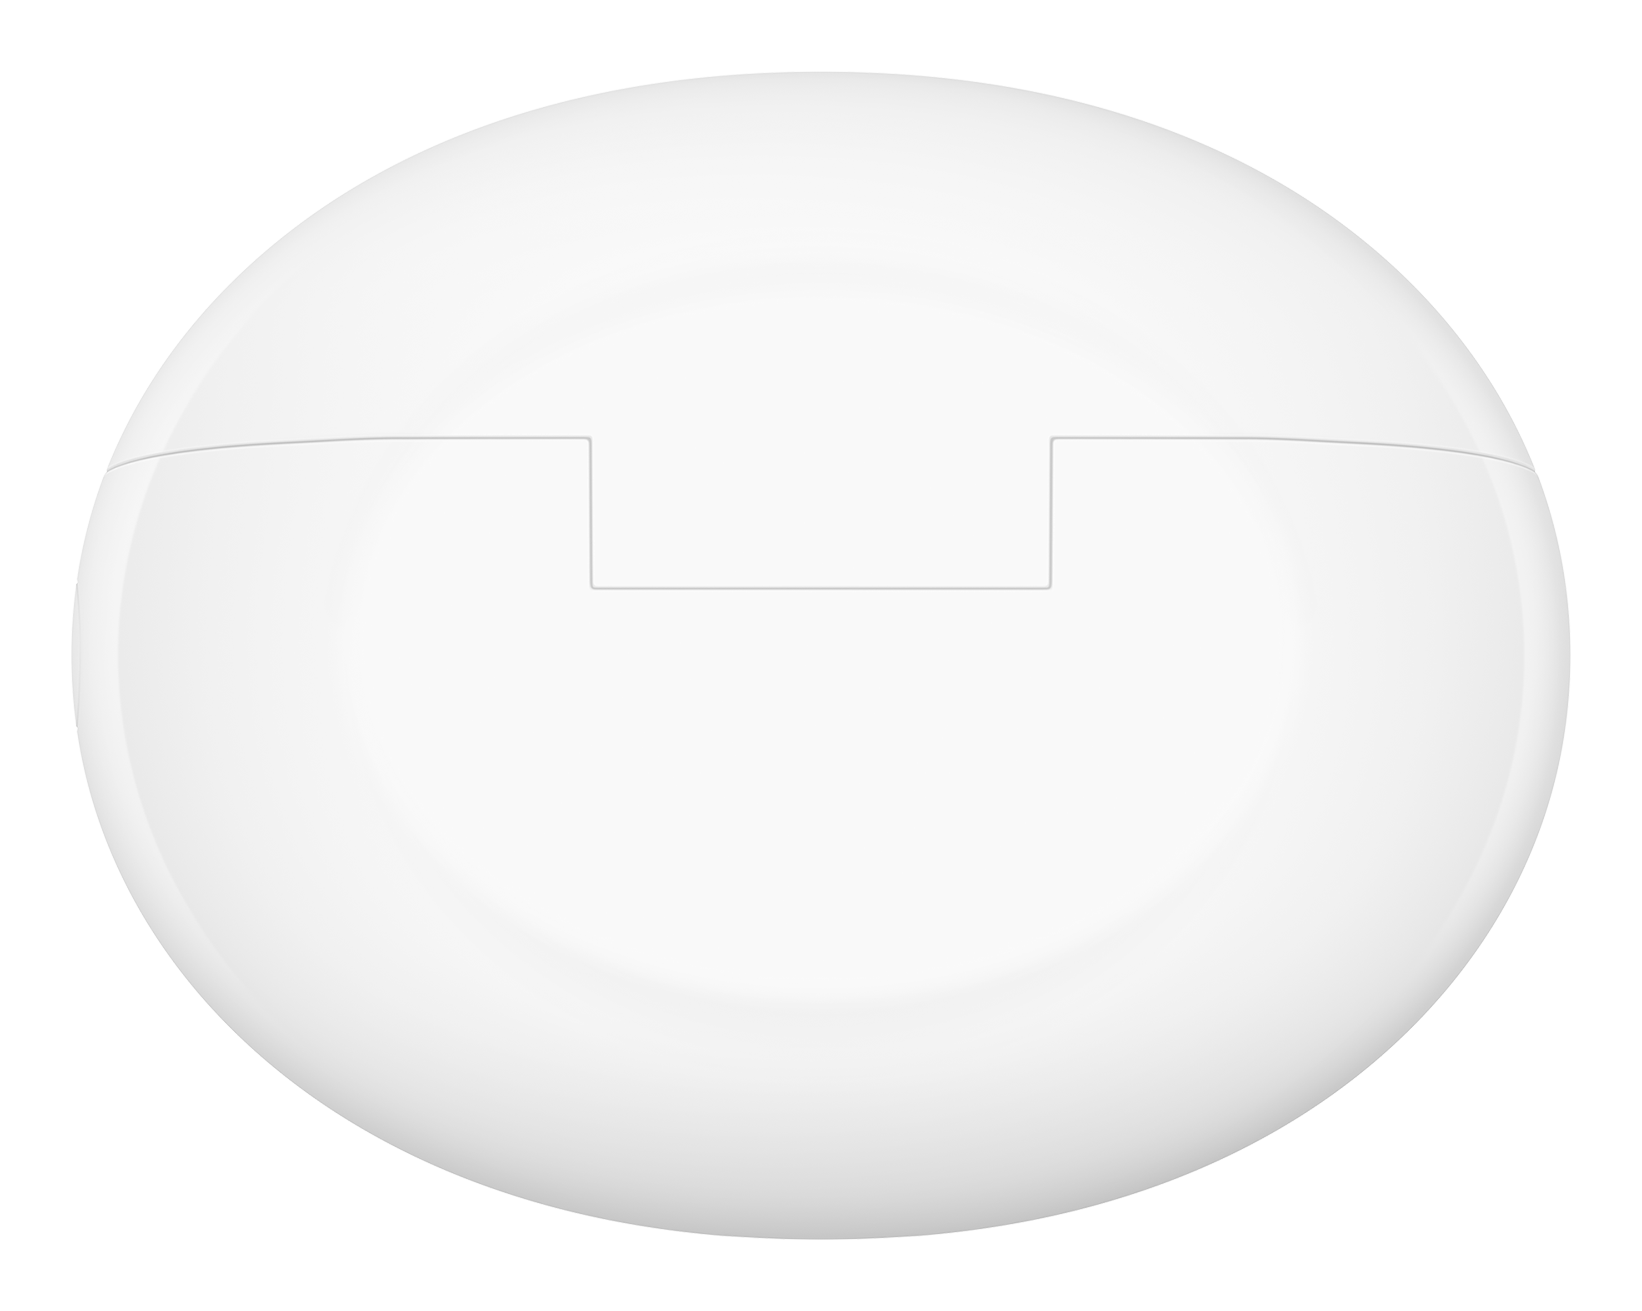 Huawei FreeBuds 5i ceramic white